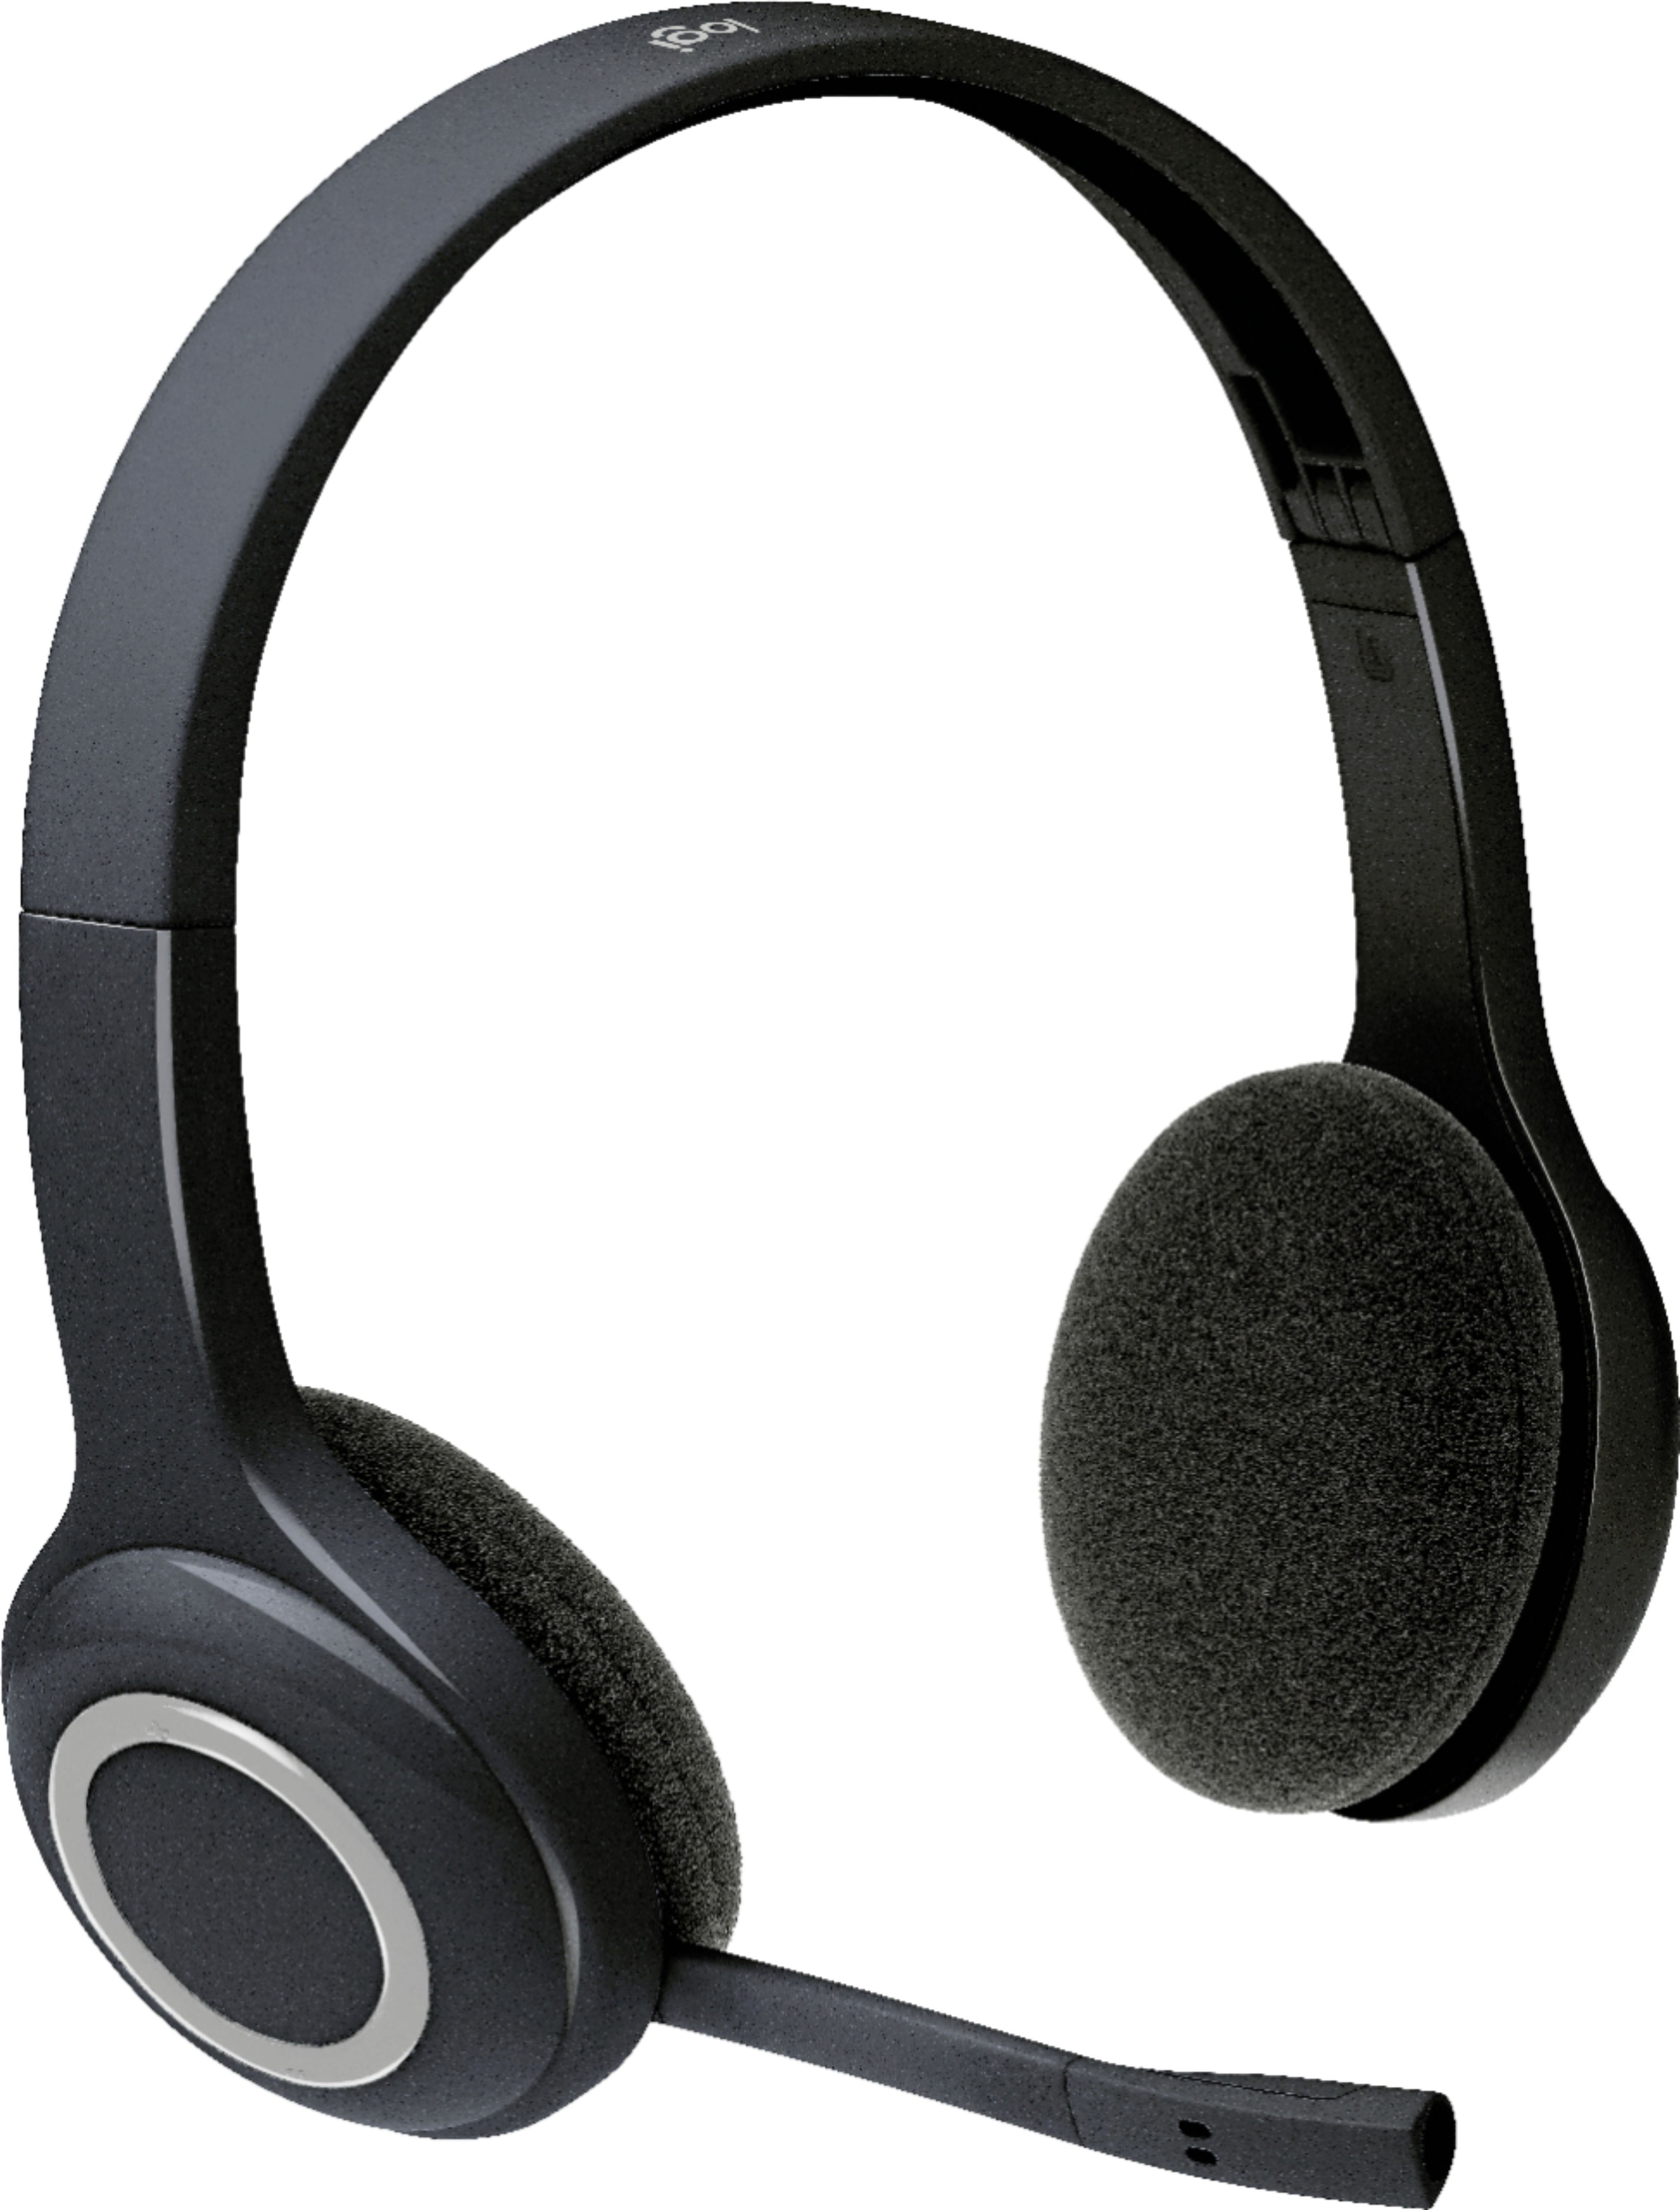 Angle View: Logitech - H600 RF Wireless On-Ear Headset - Black